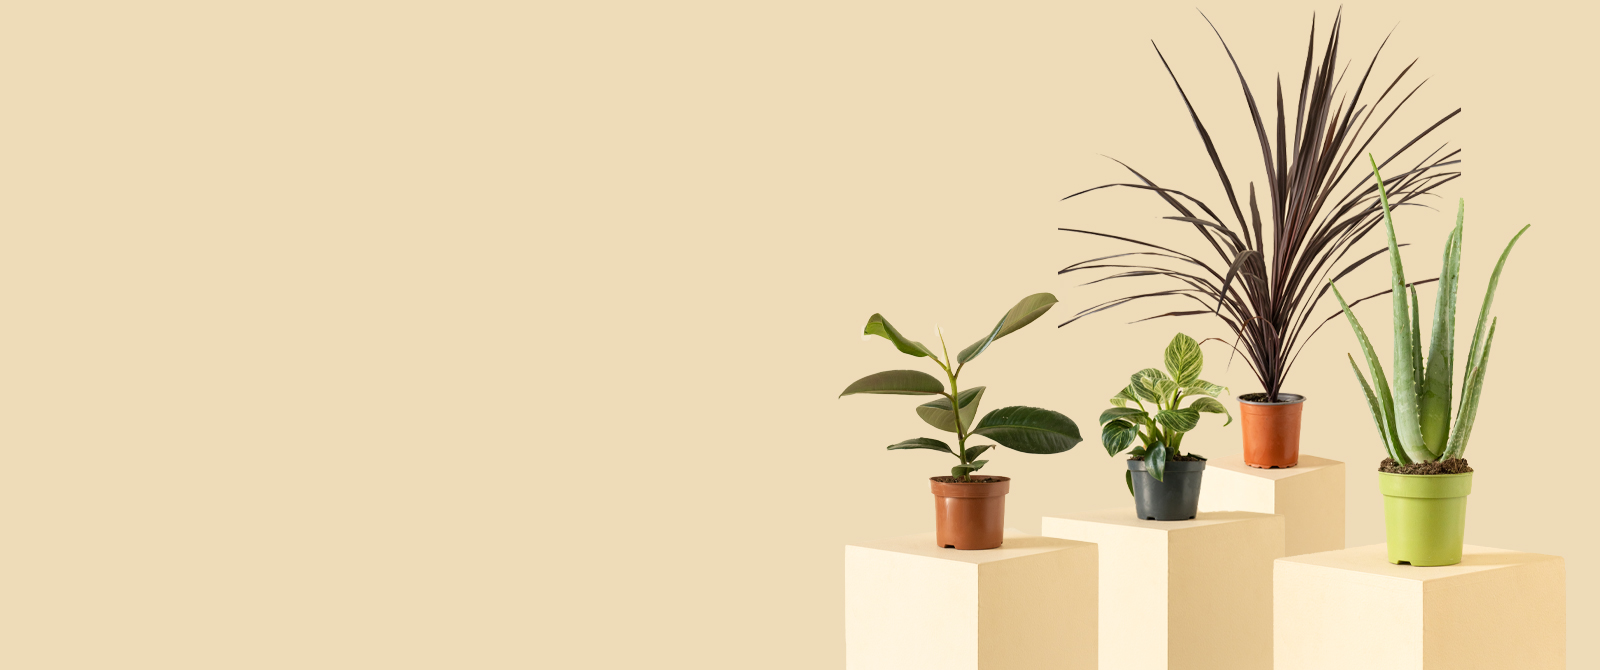 Homepage-banner-Plants-1